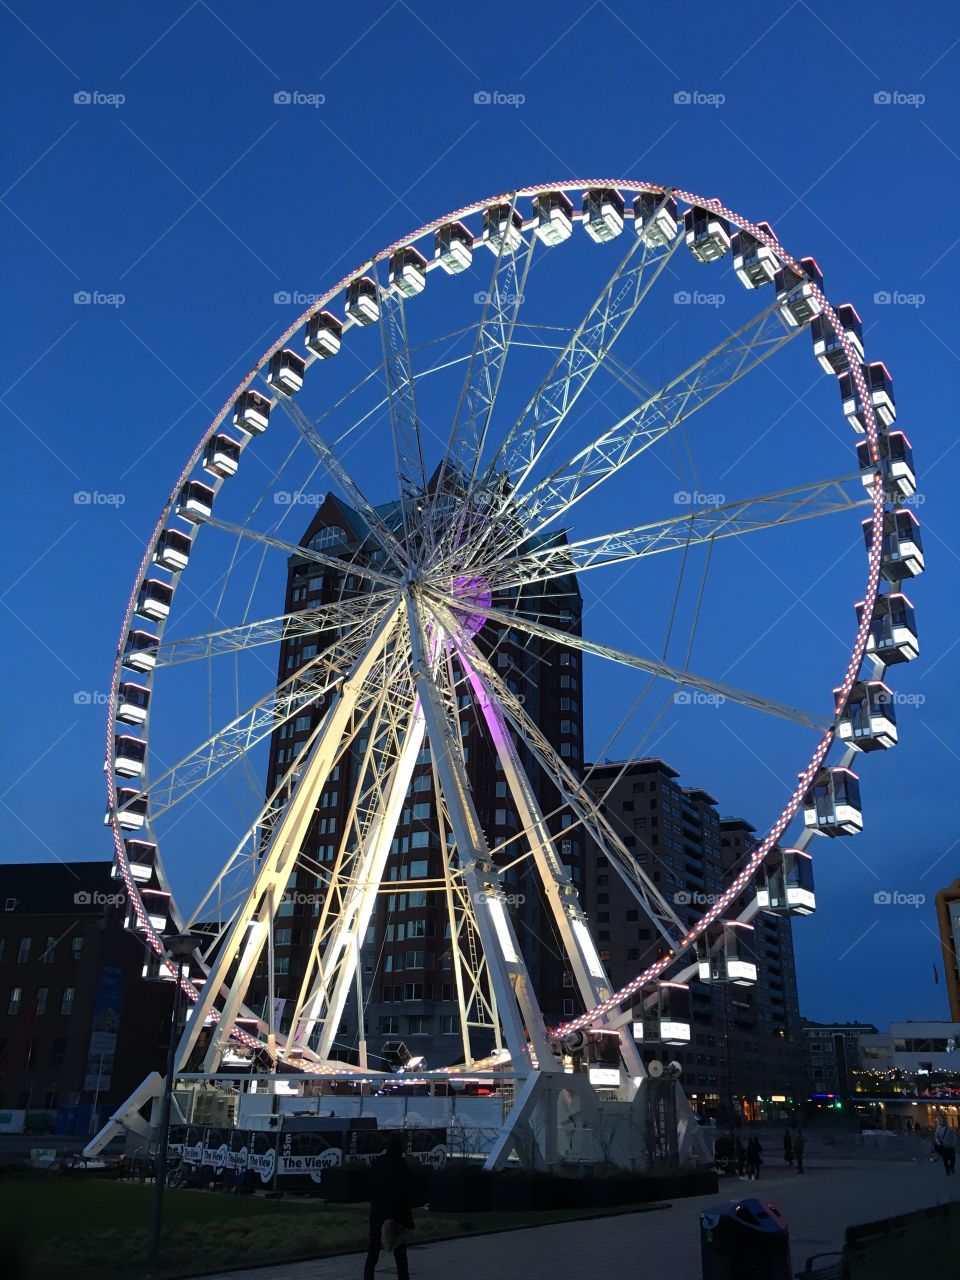 Ferris wheel near the Markthal, Rotterdam